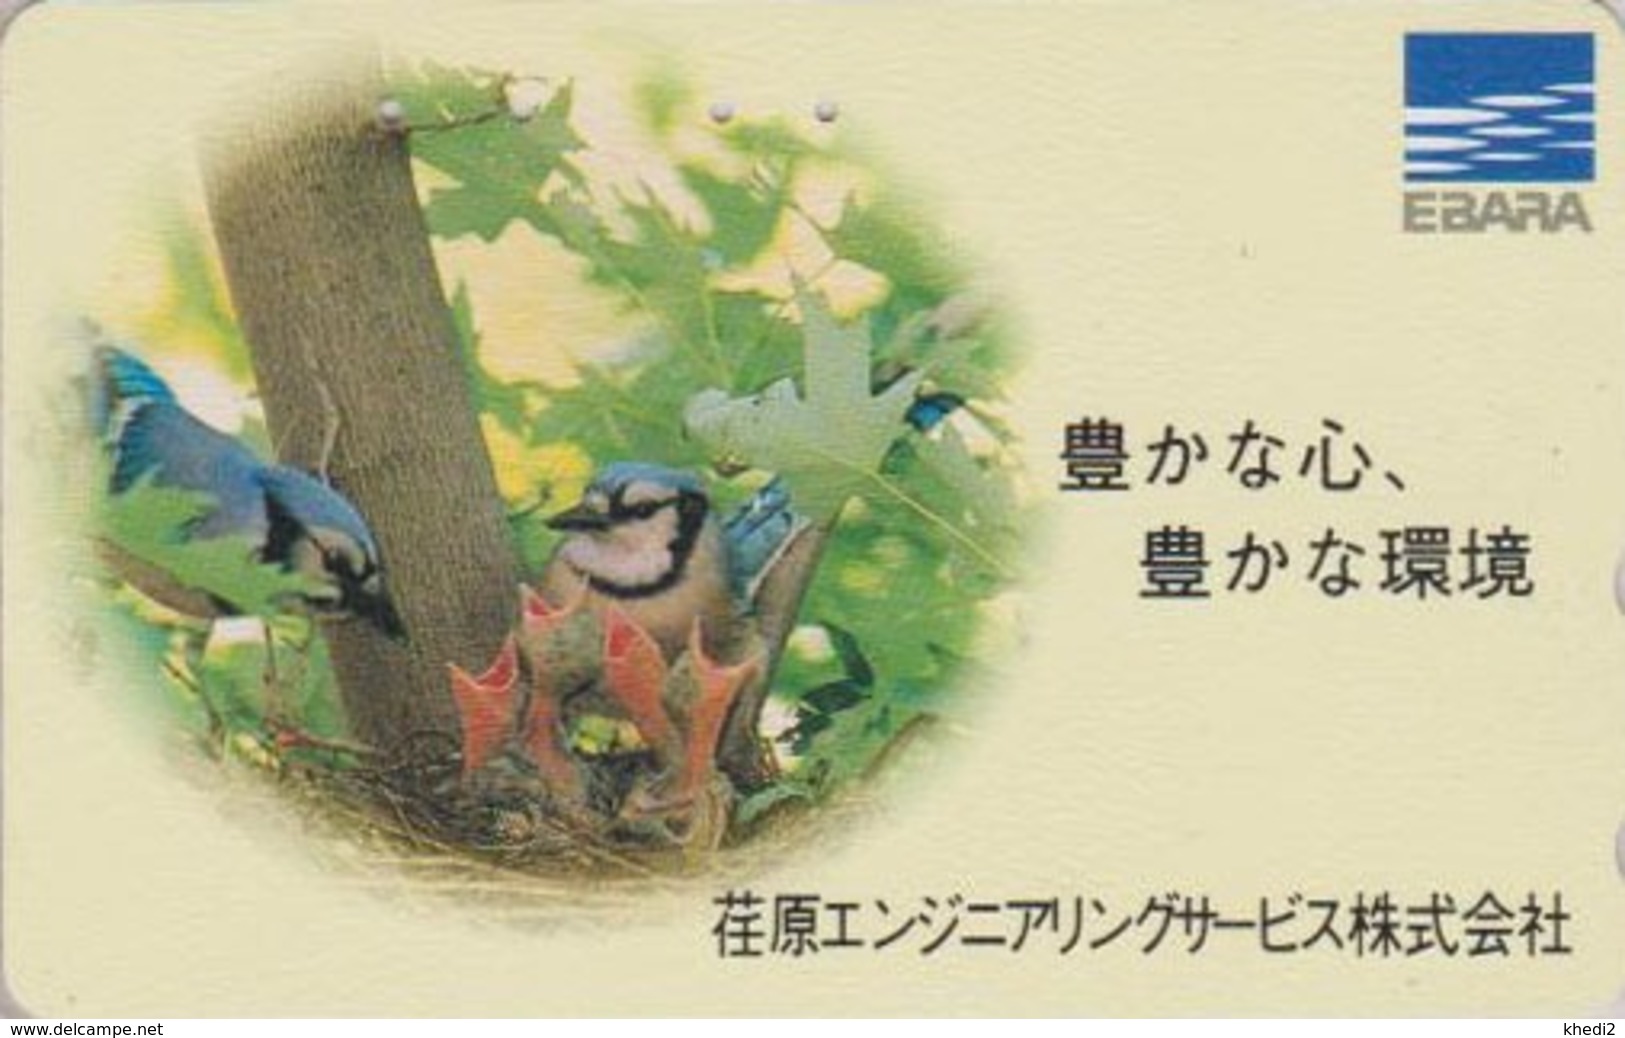 Télécarte Japon / 110-011 - Animal - OISEAU - Mésange Bleue Au Nid -  BIRD In Nest Japan Phonecard - BE 4453 - Songbirds & Tree Dwellers